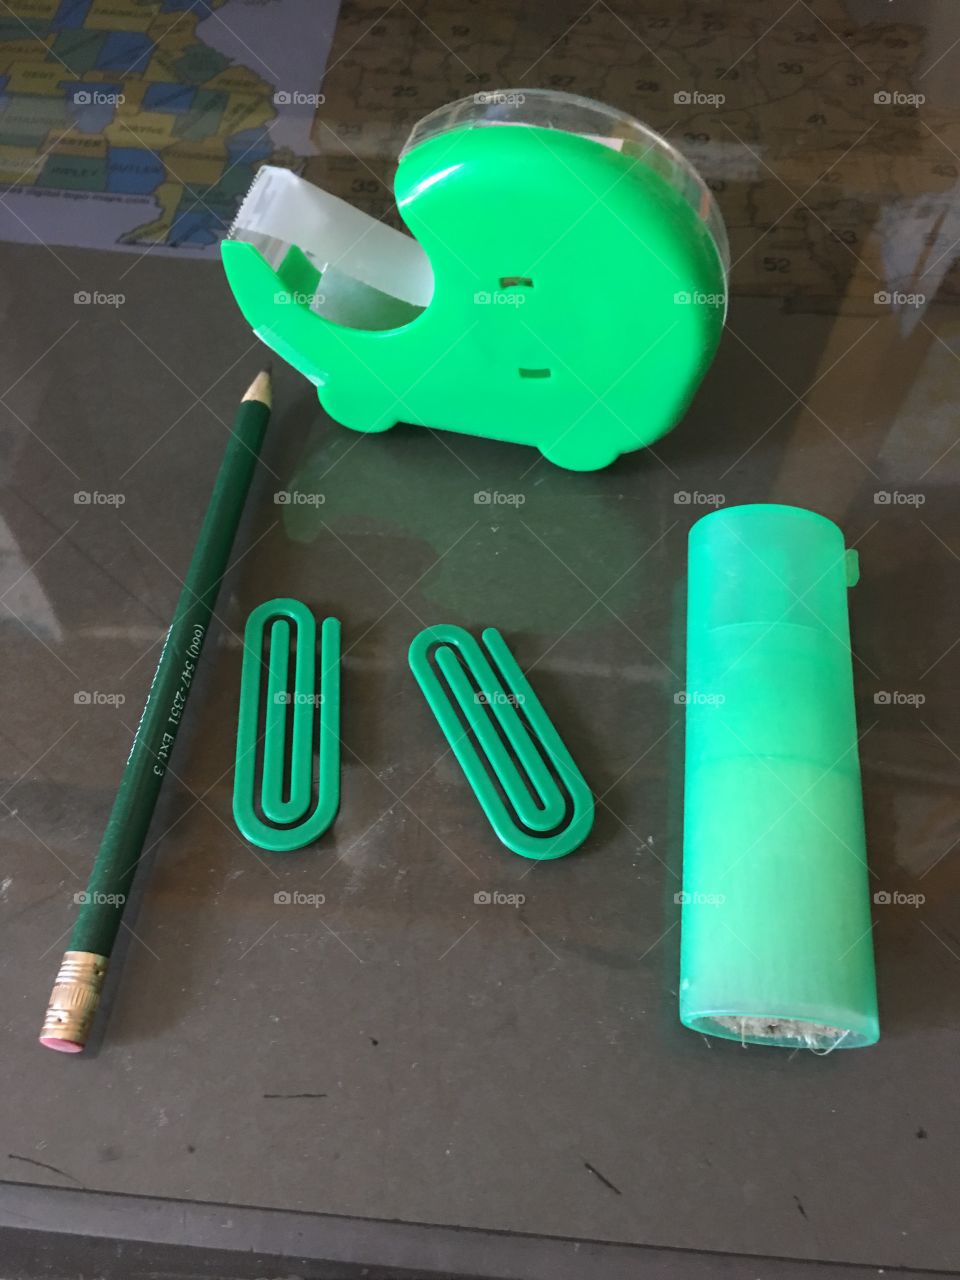 Green items 